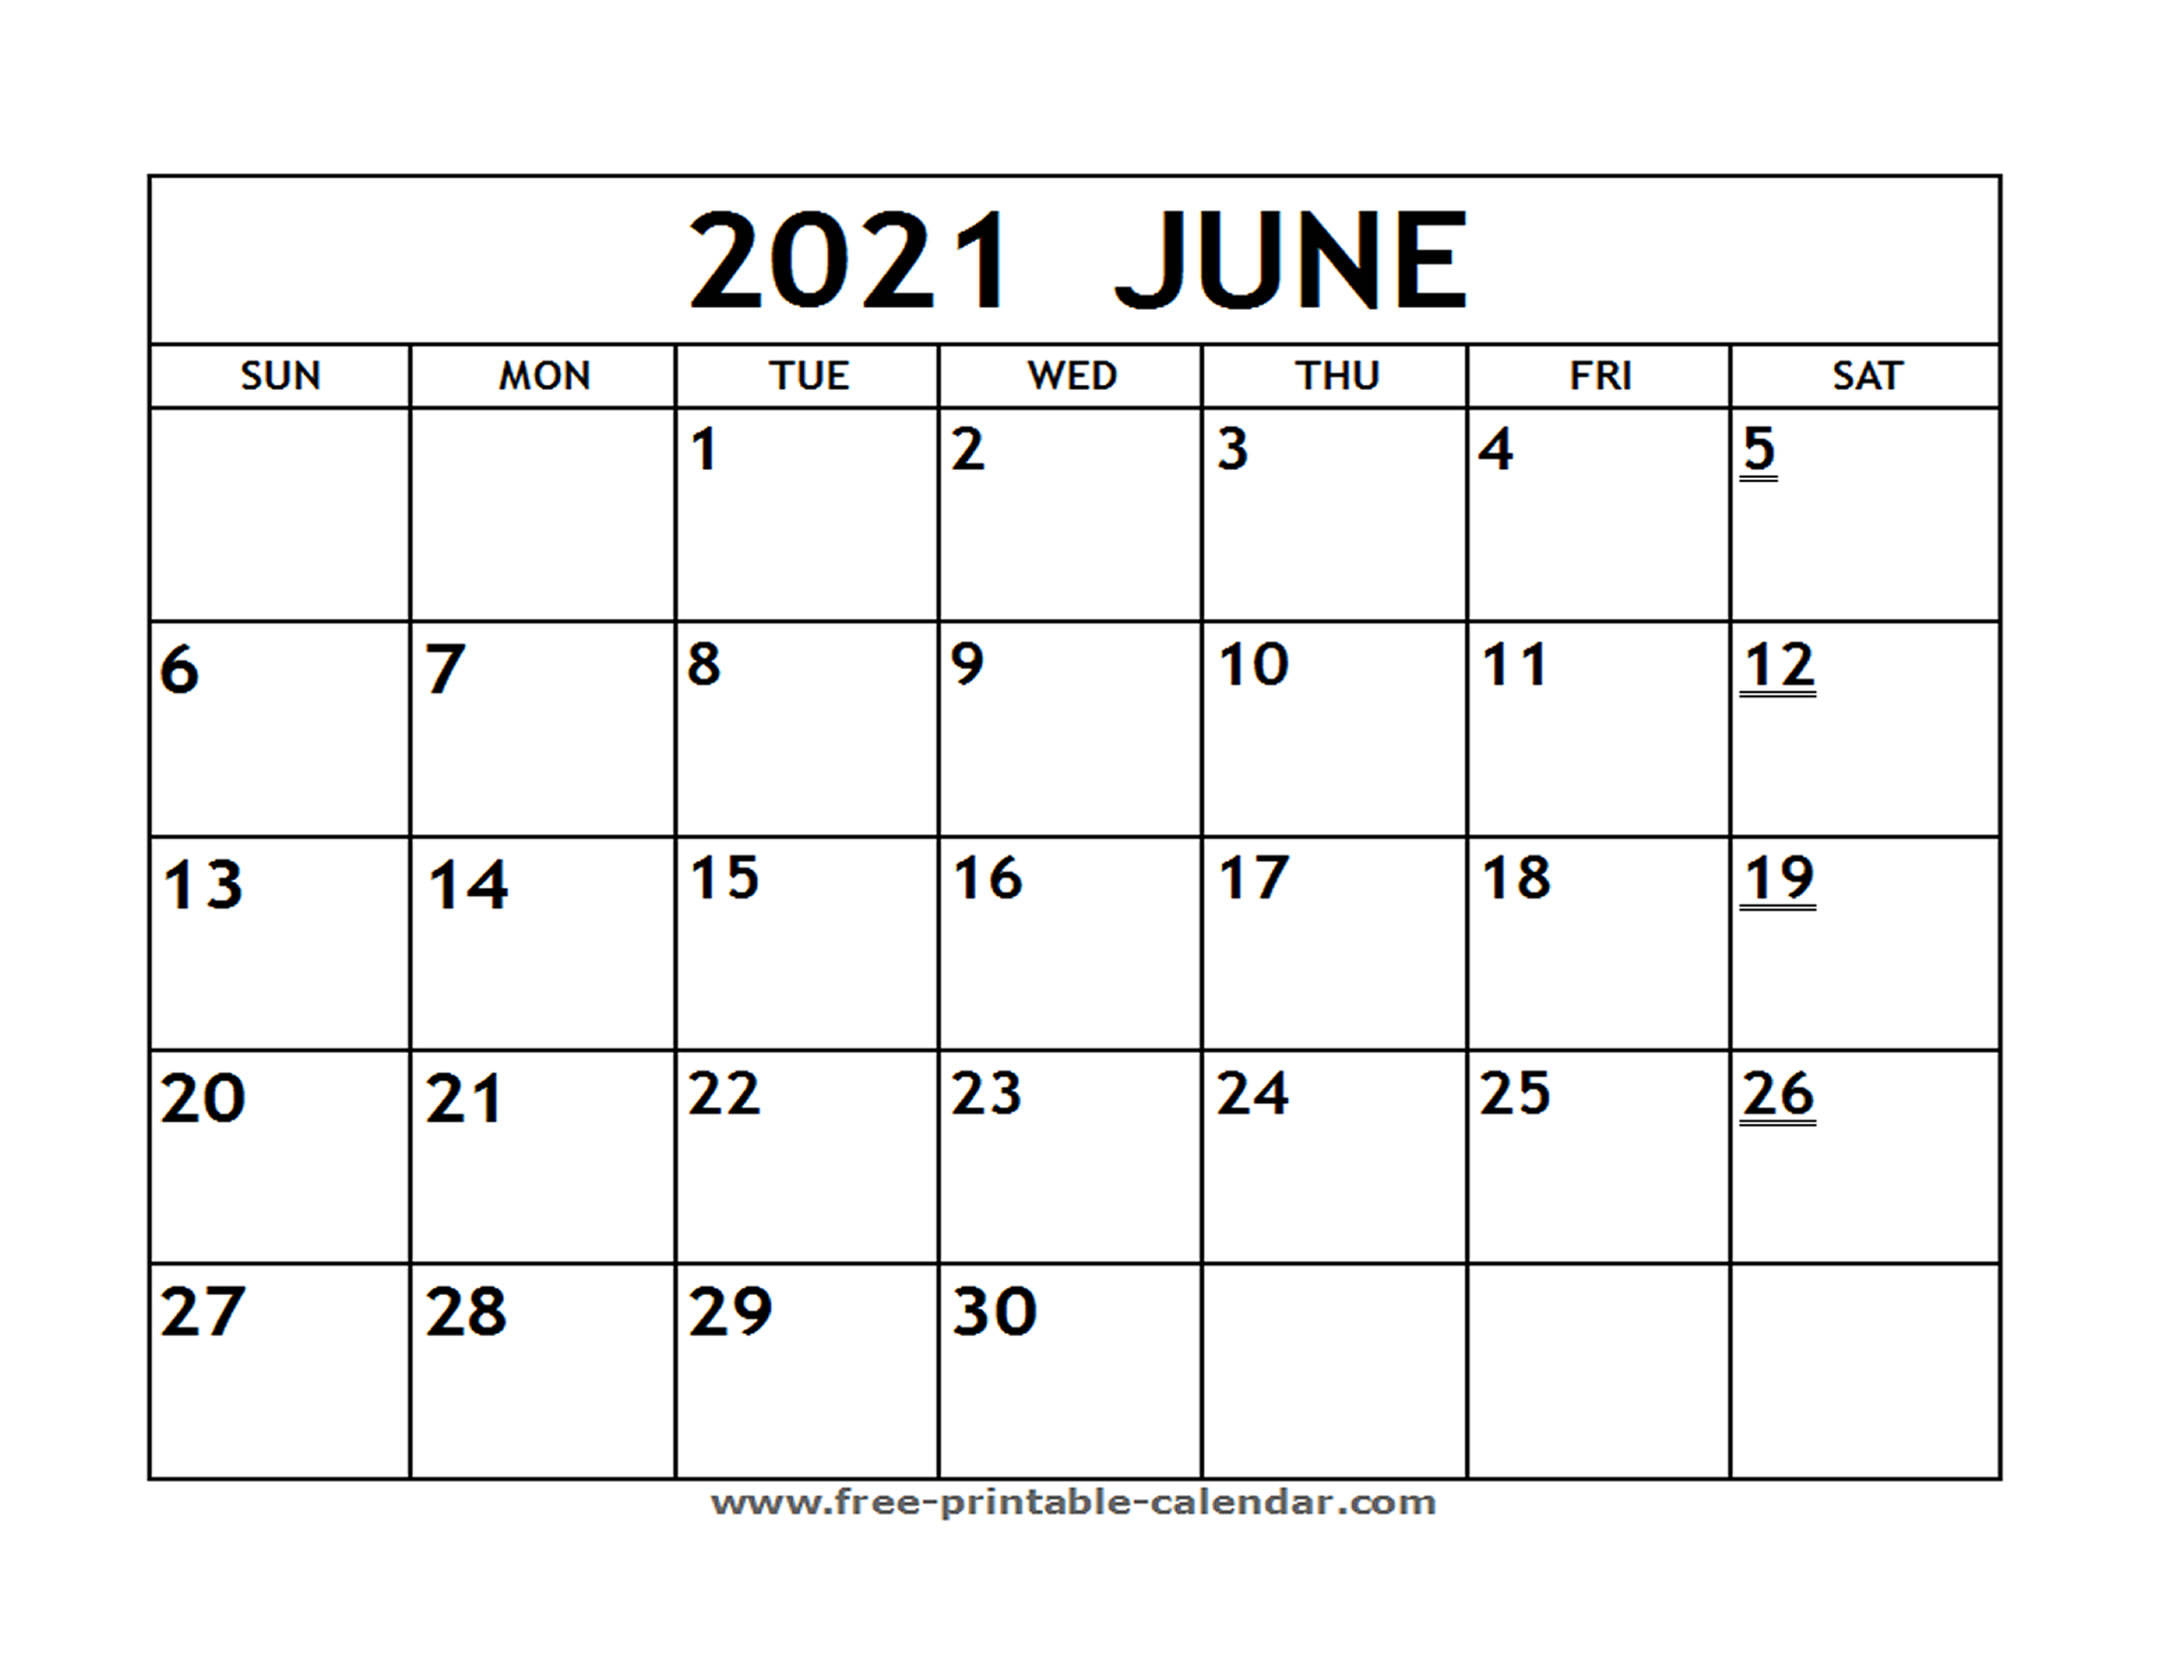 Printable 2021 June Calendar - Free-Printable-Calendar